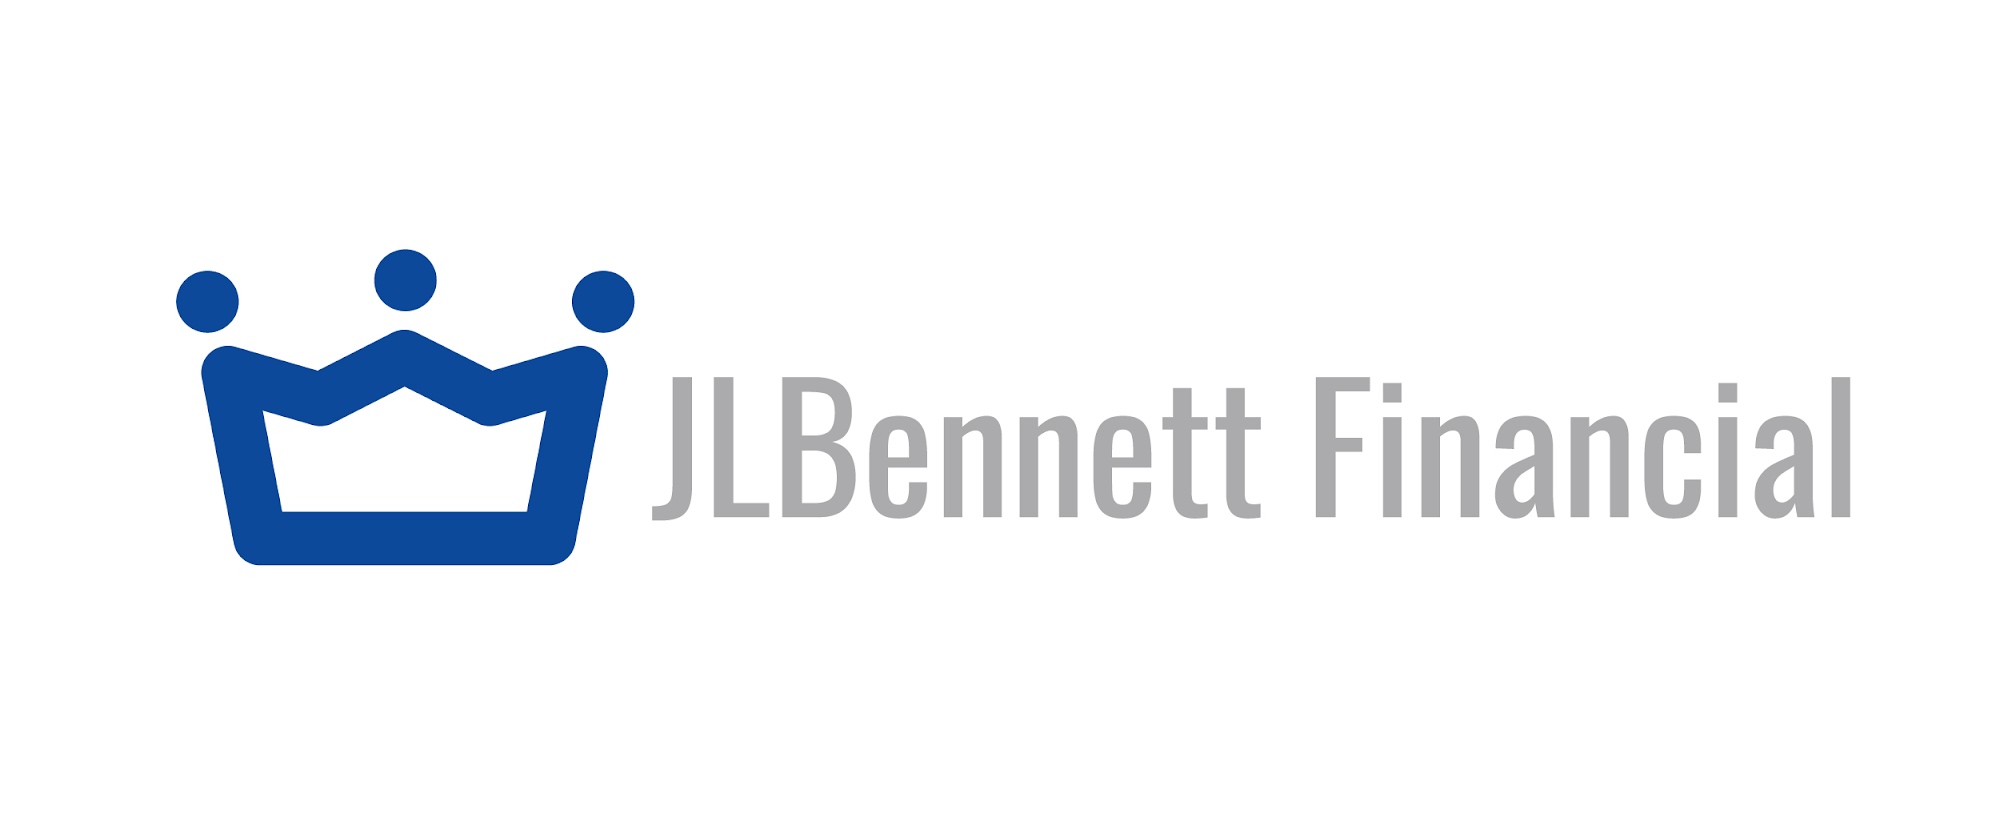 JLBennett Financial I Investia Financial Services Inc.